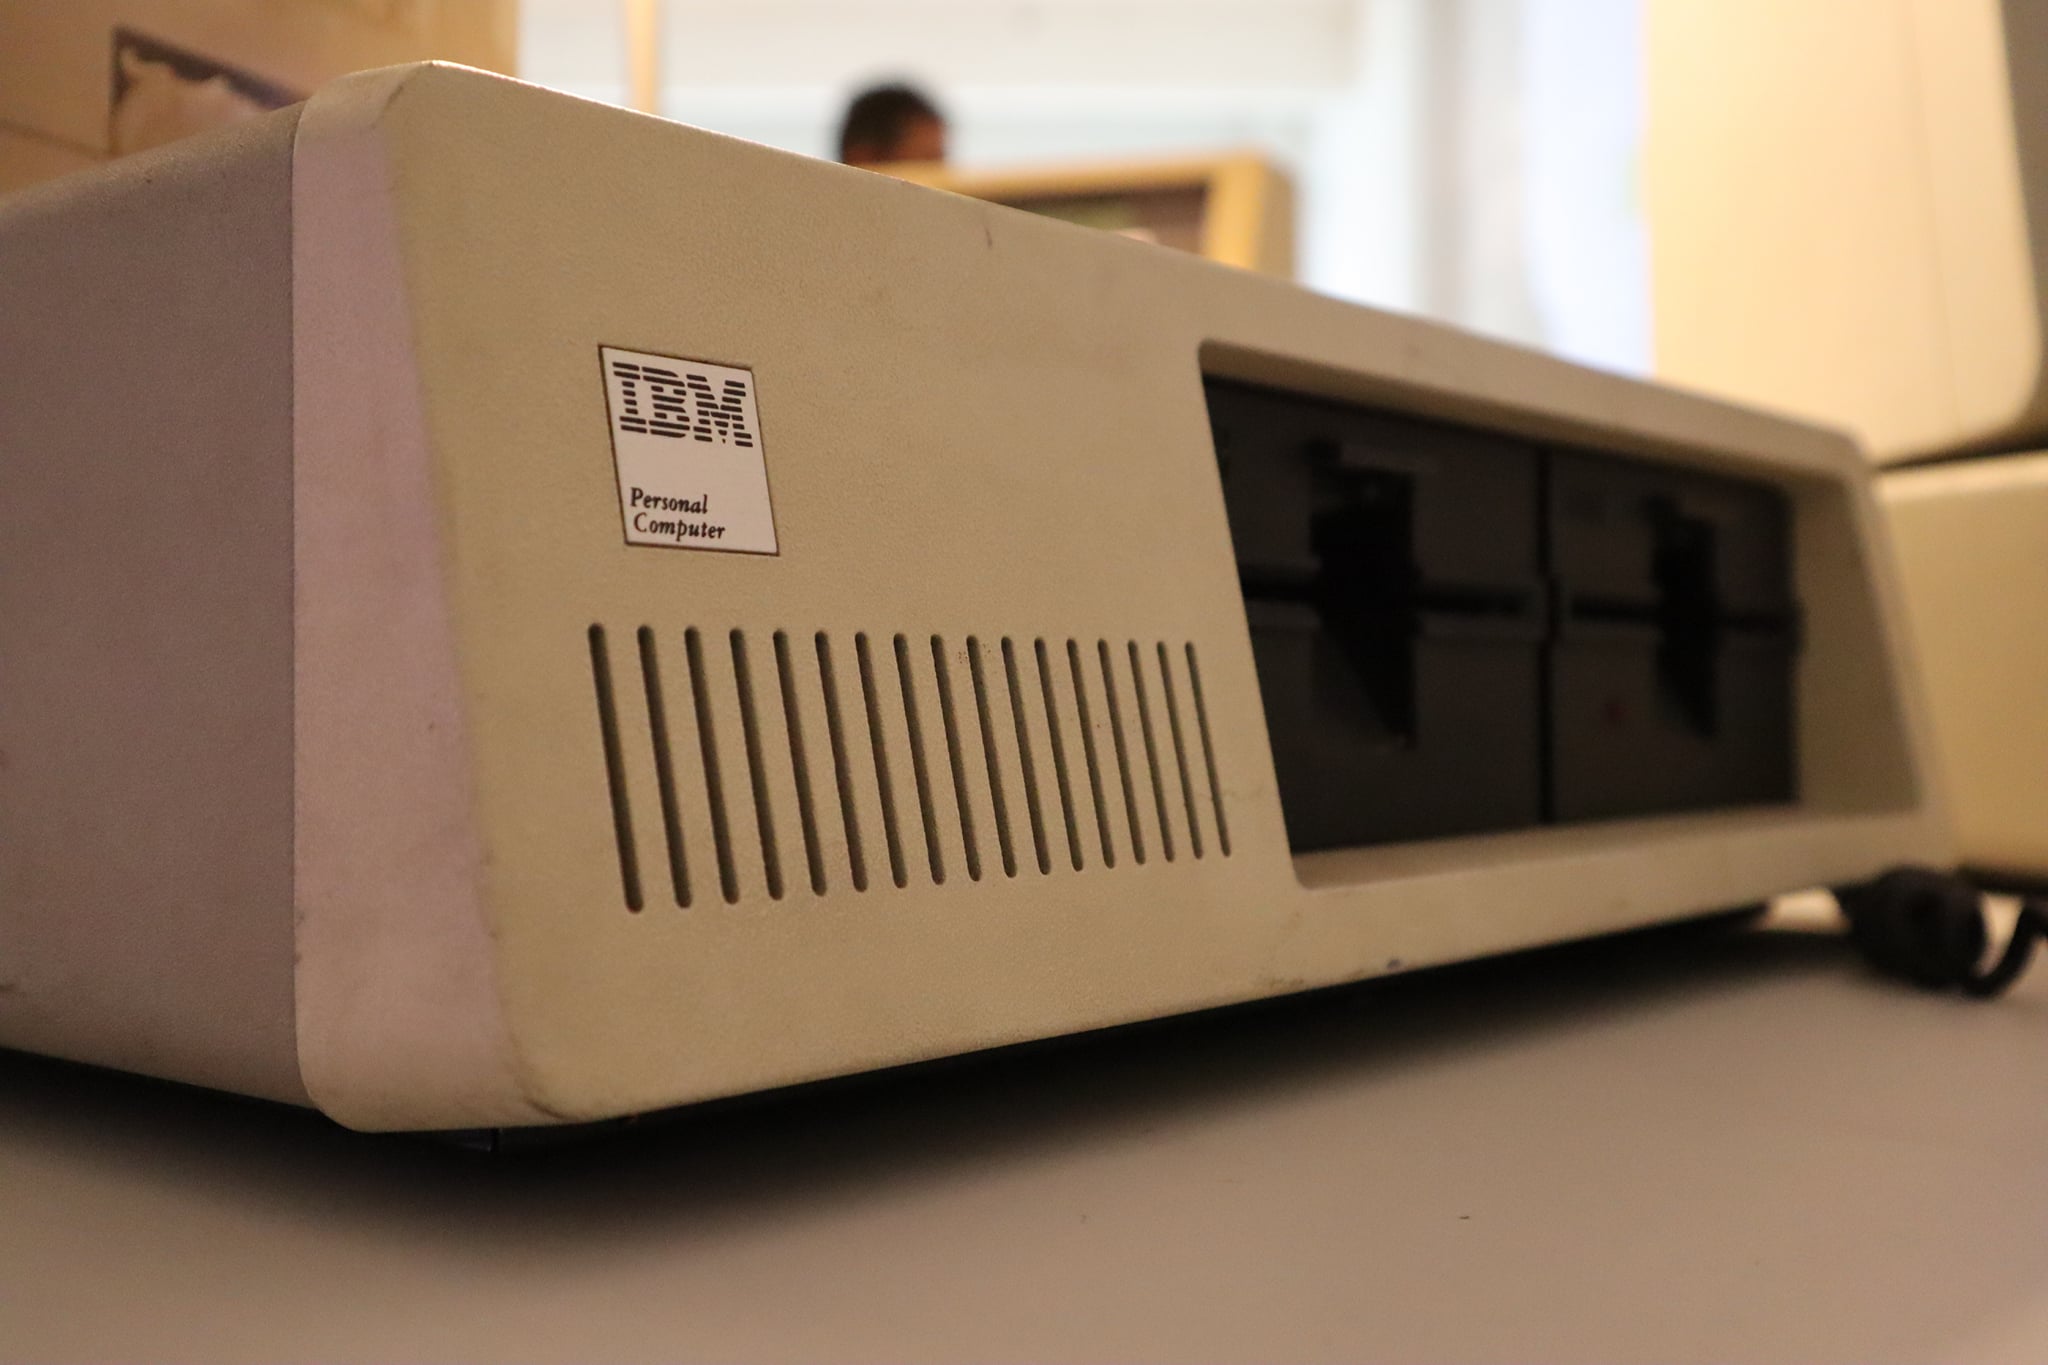 Uno slideshow a fosfori verdi per l’IBM PC 5150